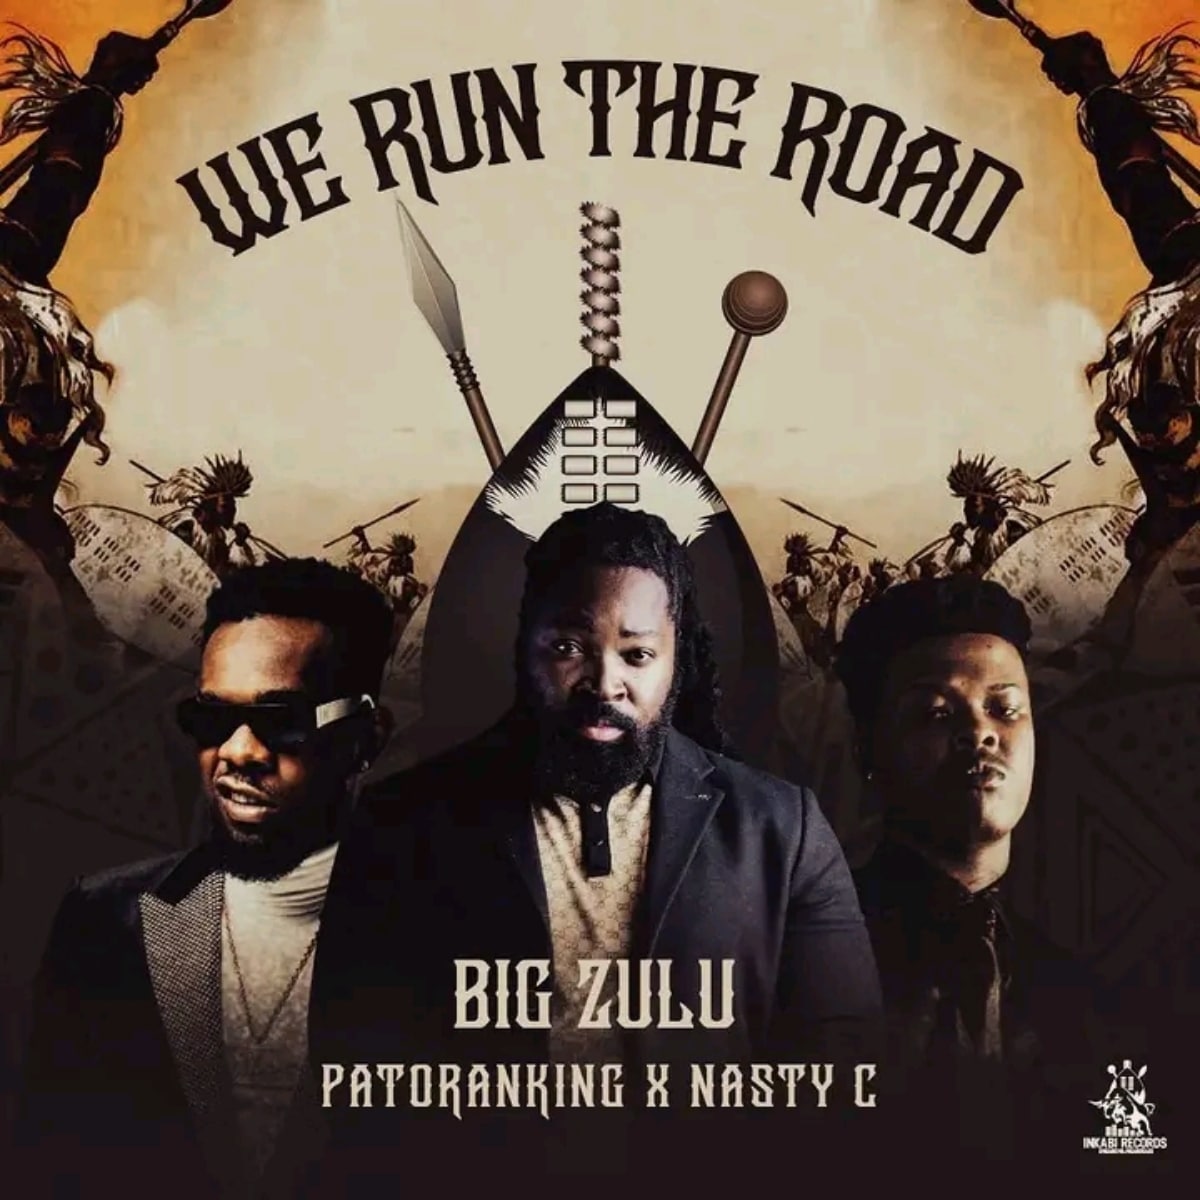 DOWNLOAD: Big Zulu Ft. Patoranking & Nasty C – “We Run The Road” Mp3